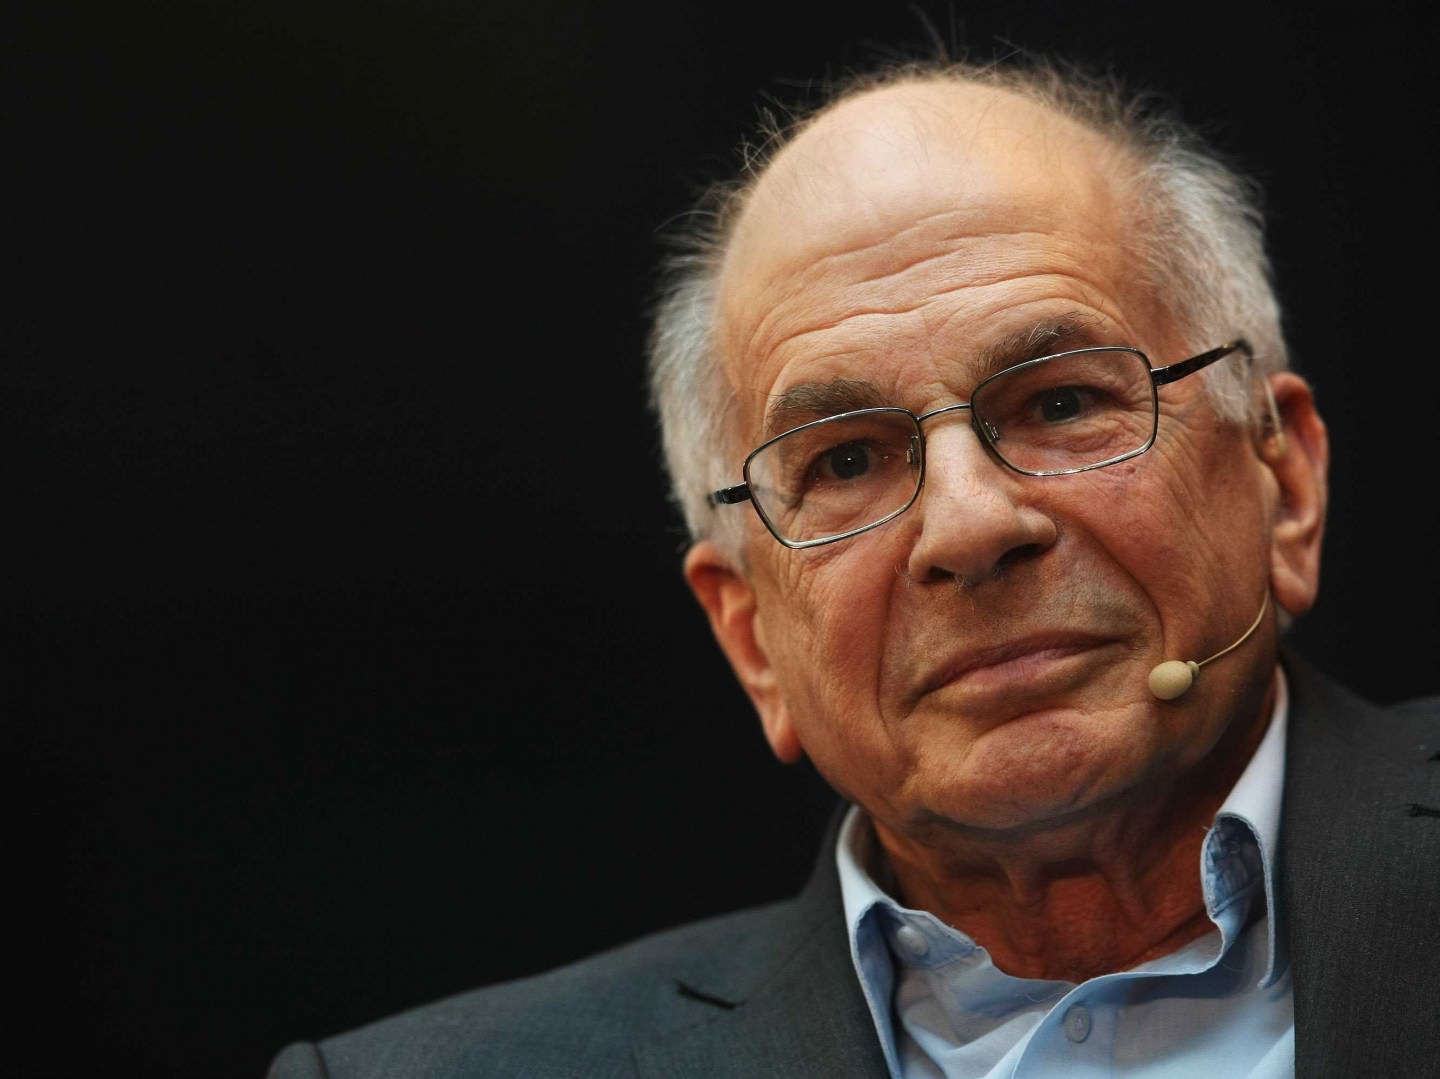 Daniel Kahneman - Thinking Fast and Slow